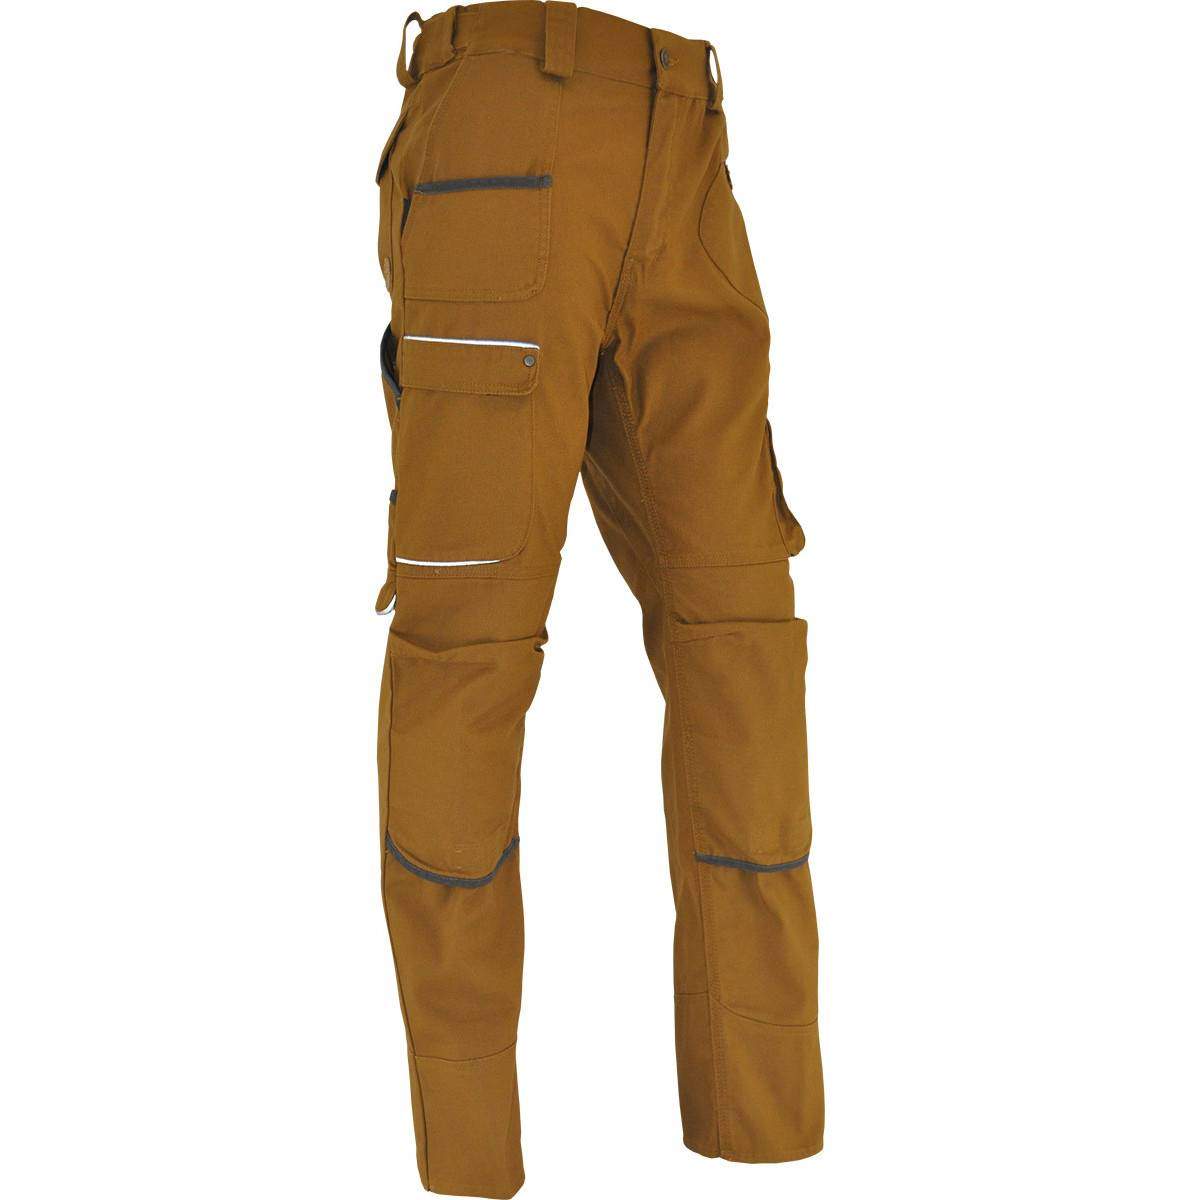 Pantalon chantier SAHARA Taille 44, poches multiples, genouillères incluses, bronze